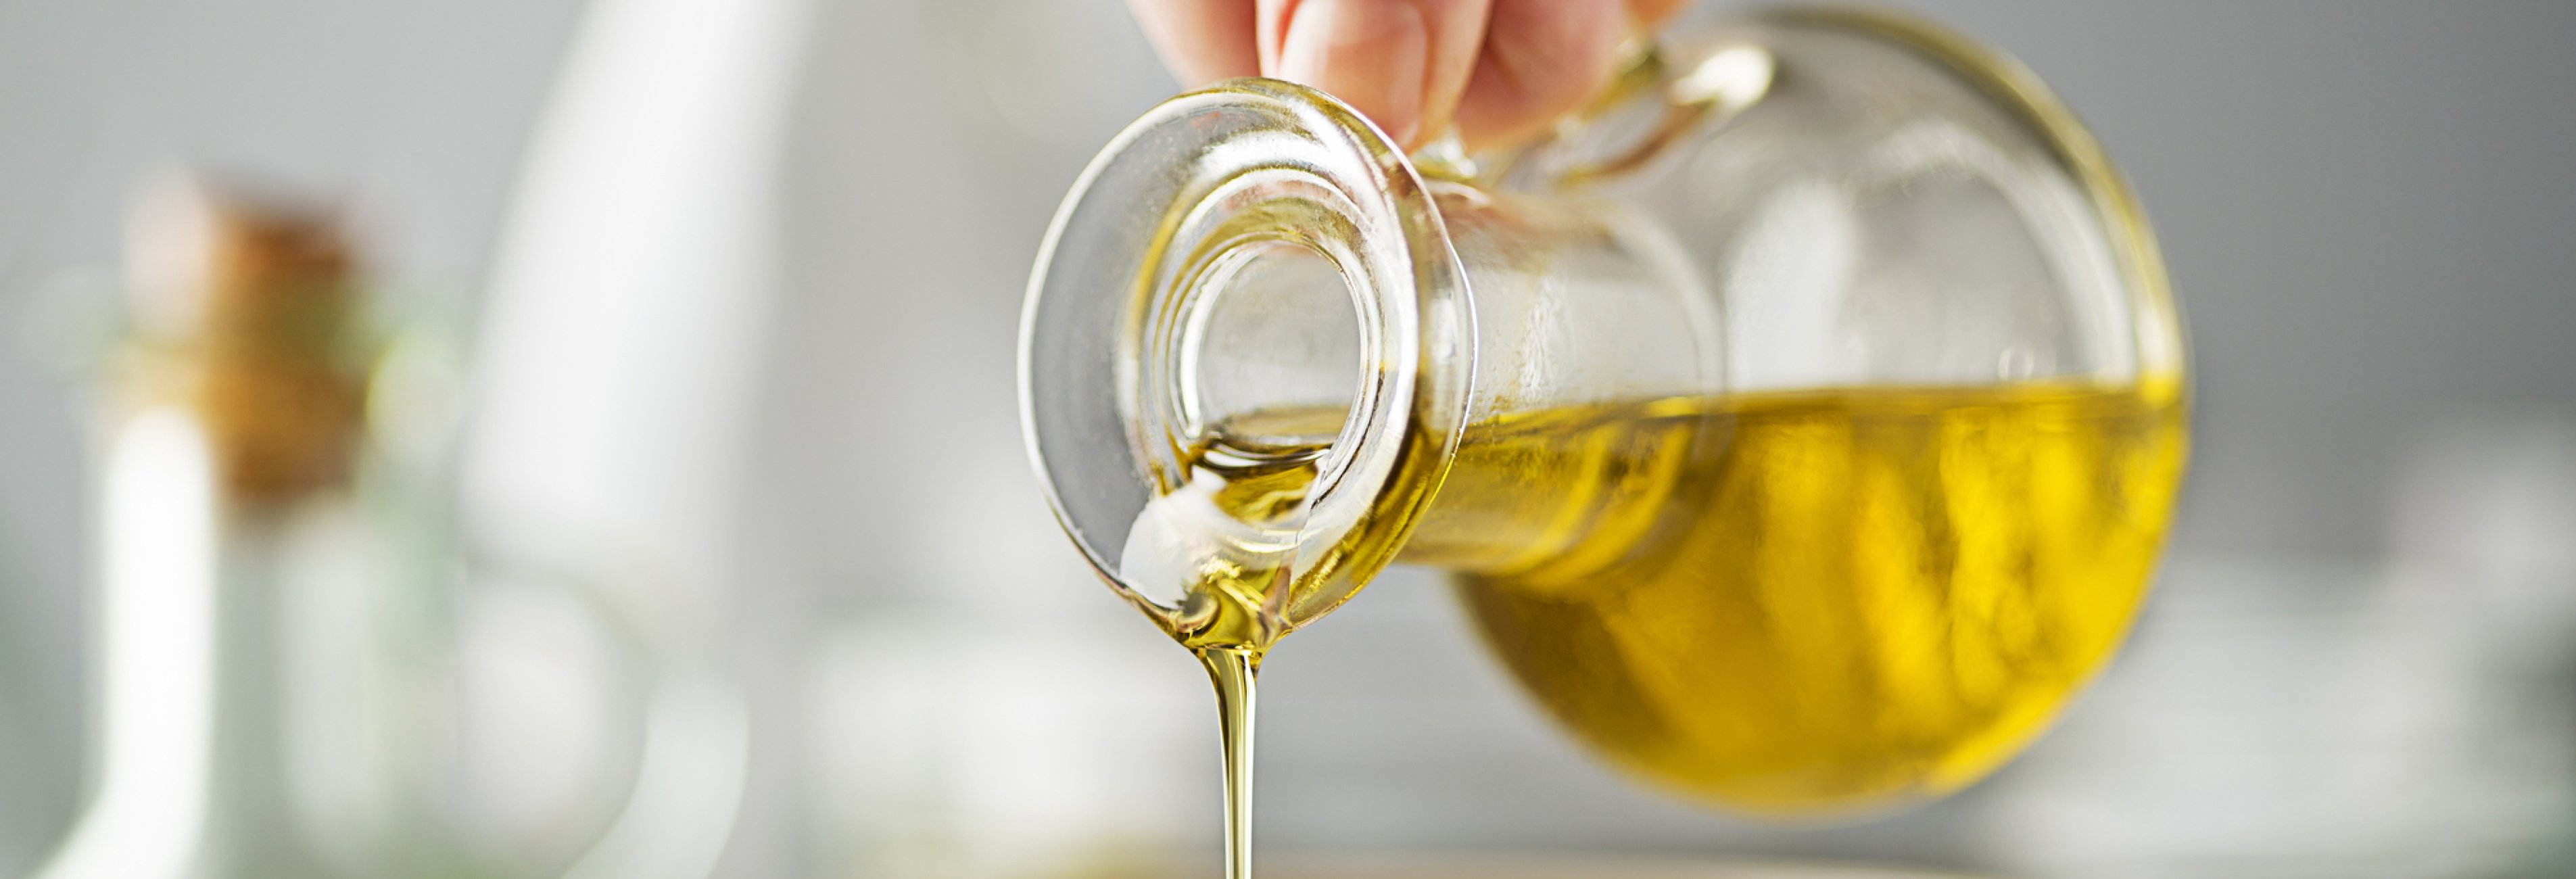 мед раст масло сода фото 117